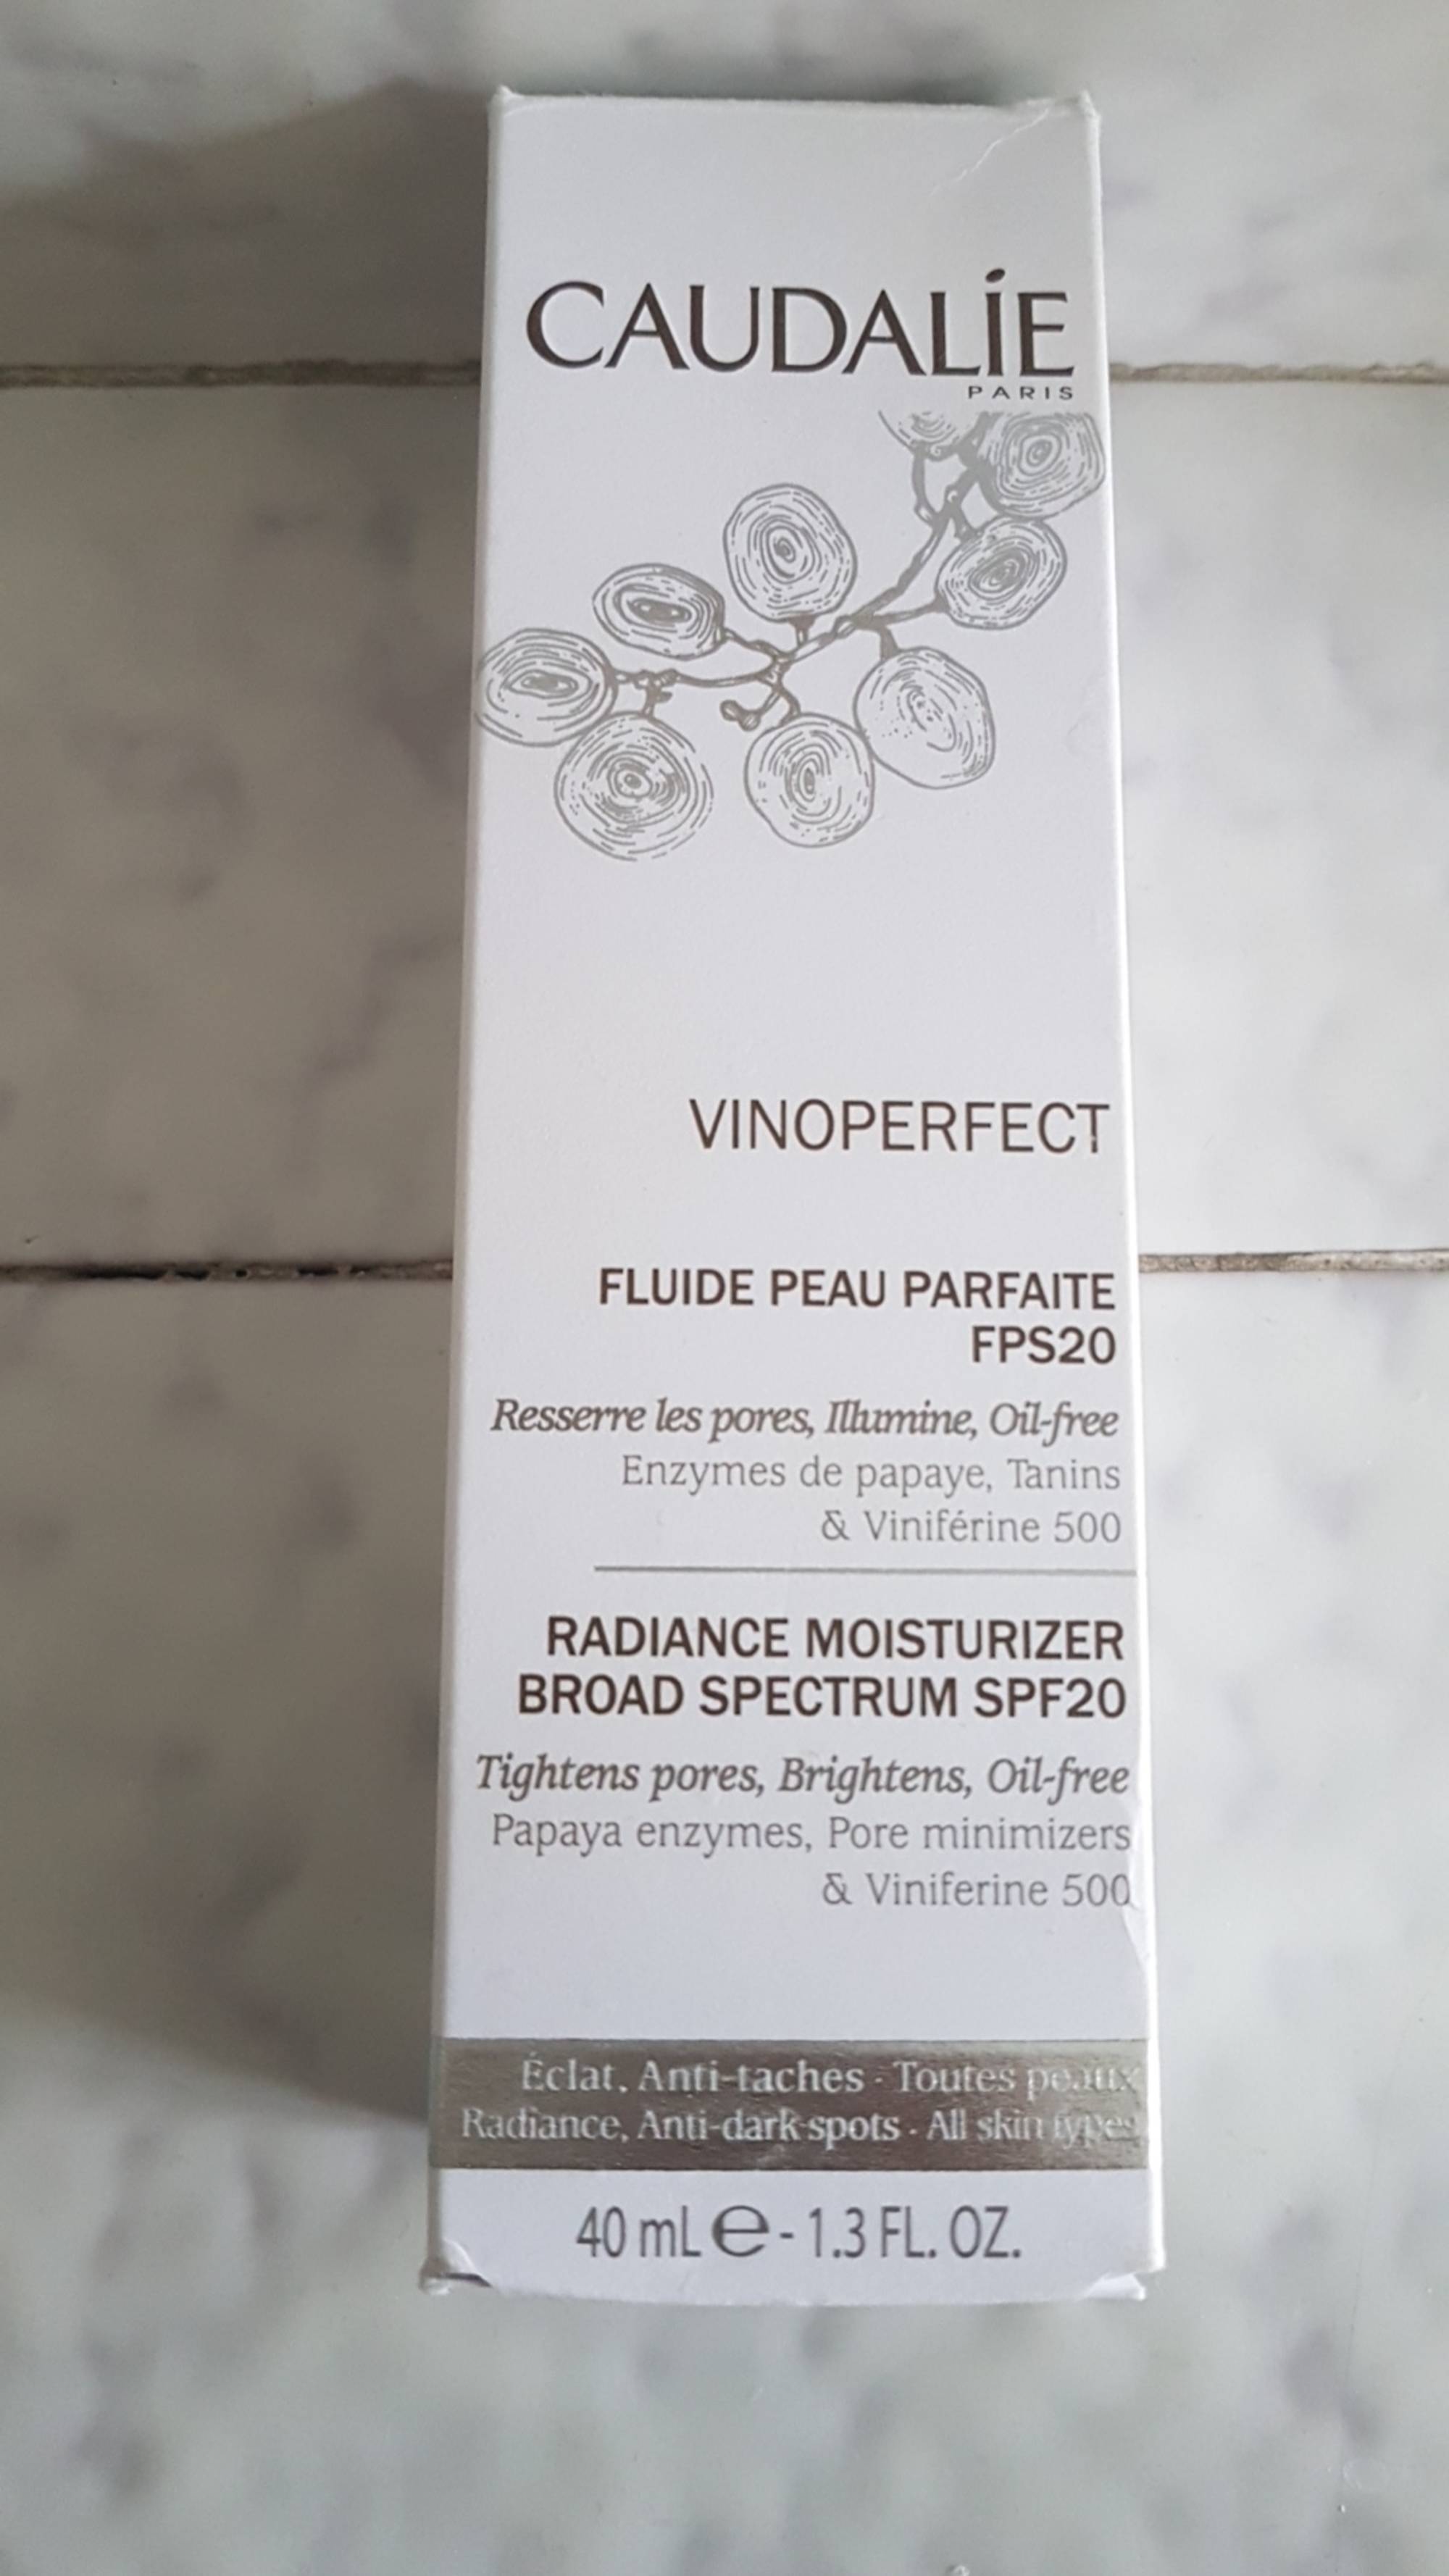 CAUDALIE - Vinoperfect - Fluide peau parfaite FPS 20